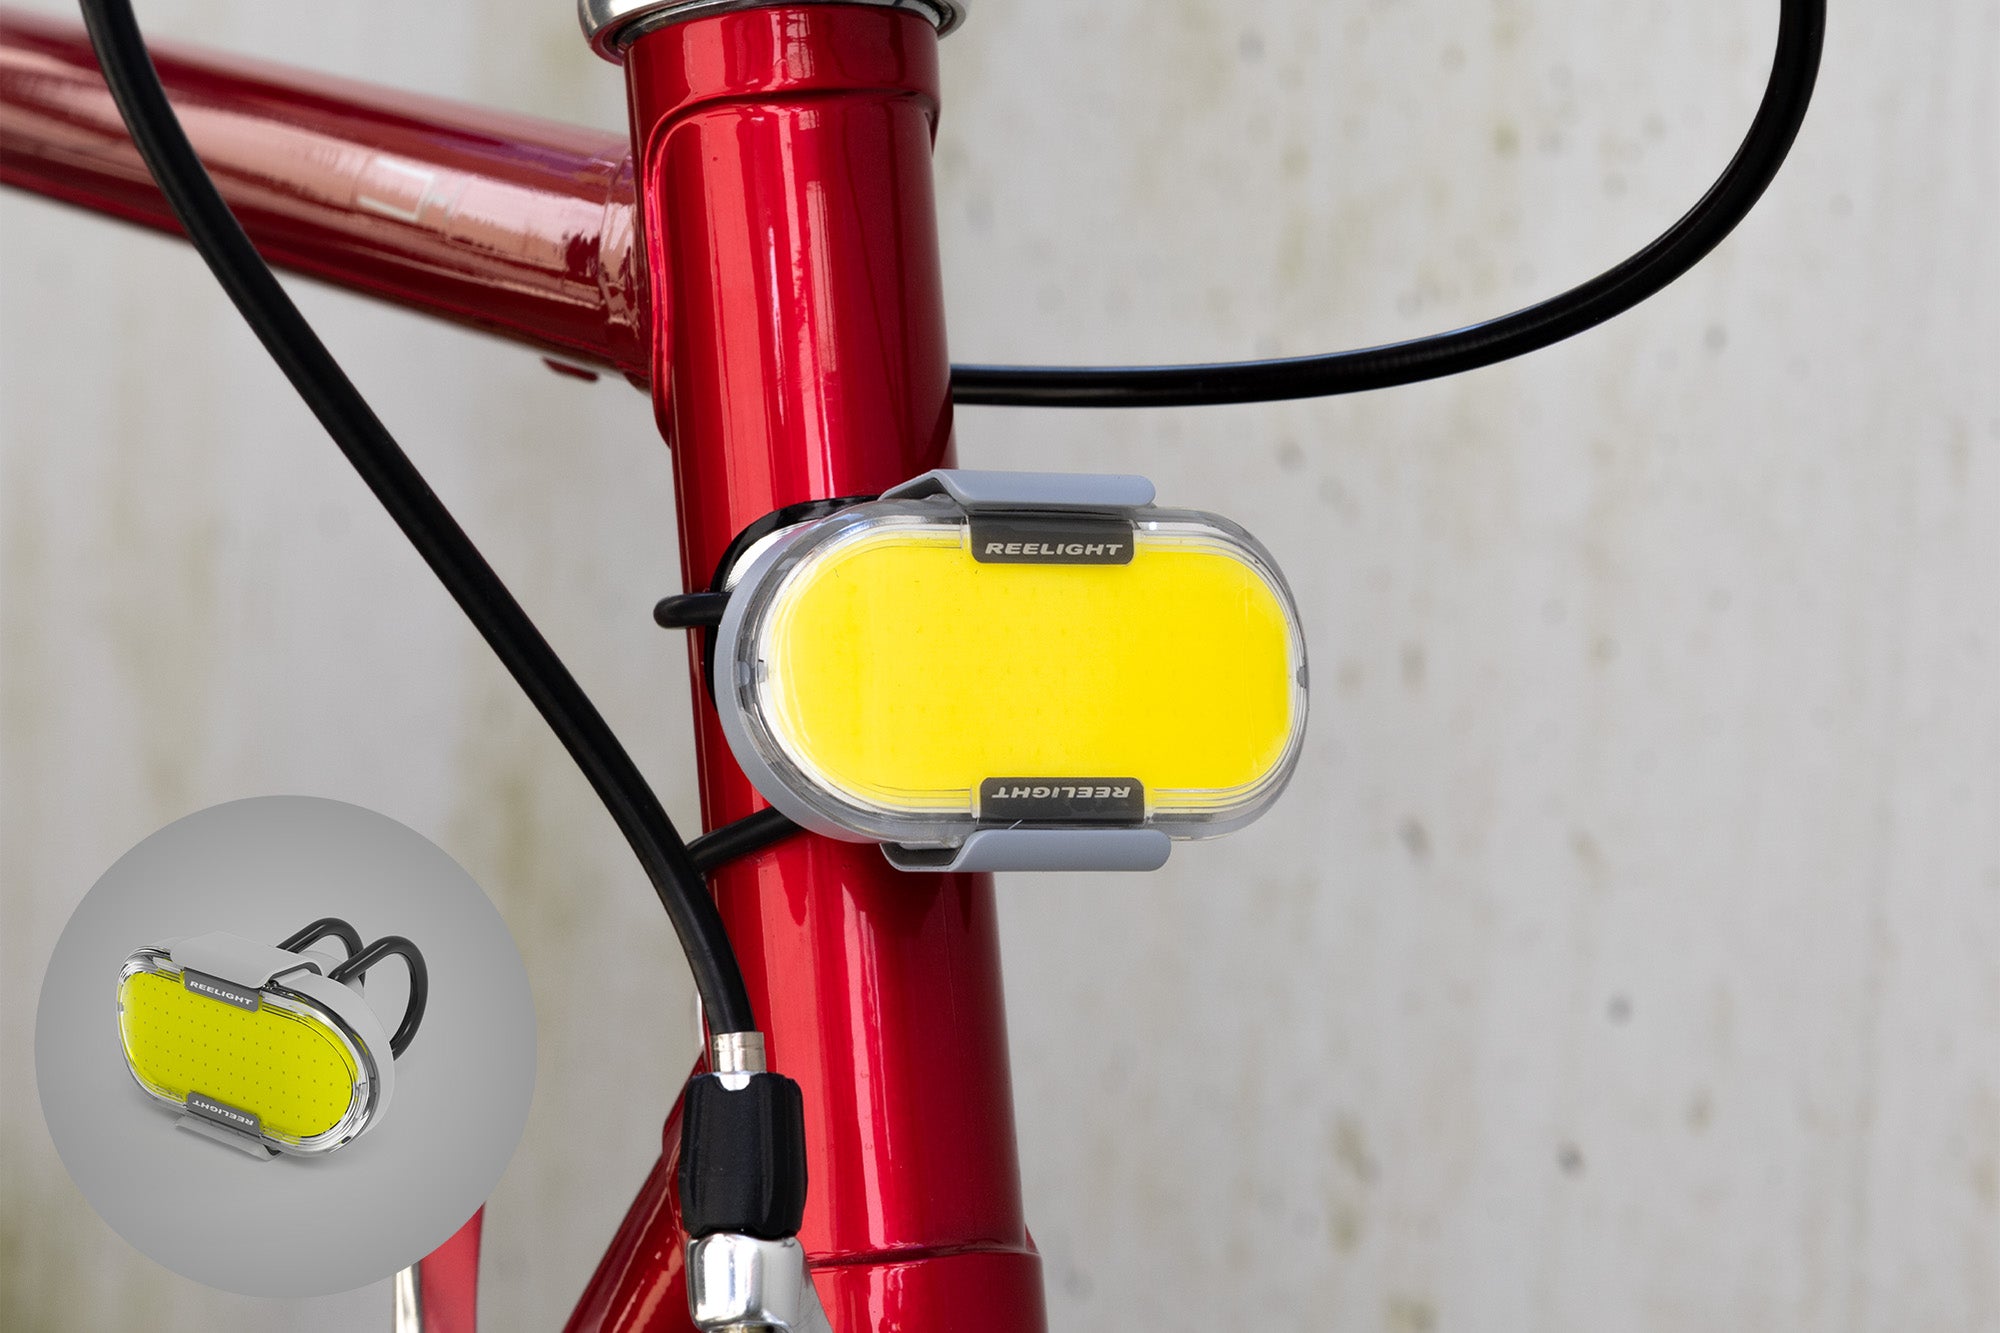 Reelight GEM+ Front Light  Powerful Rechargeable Bike Light